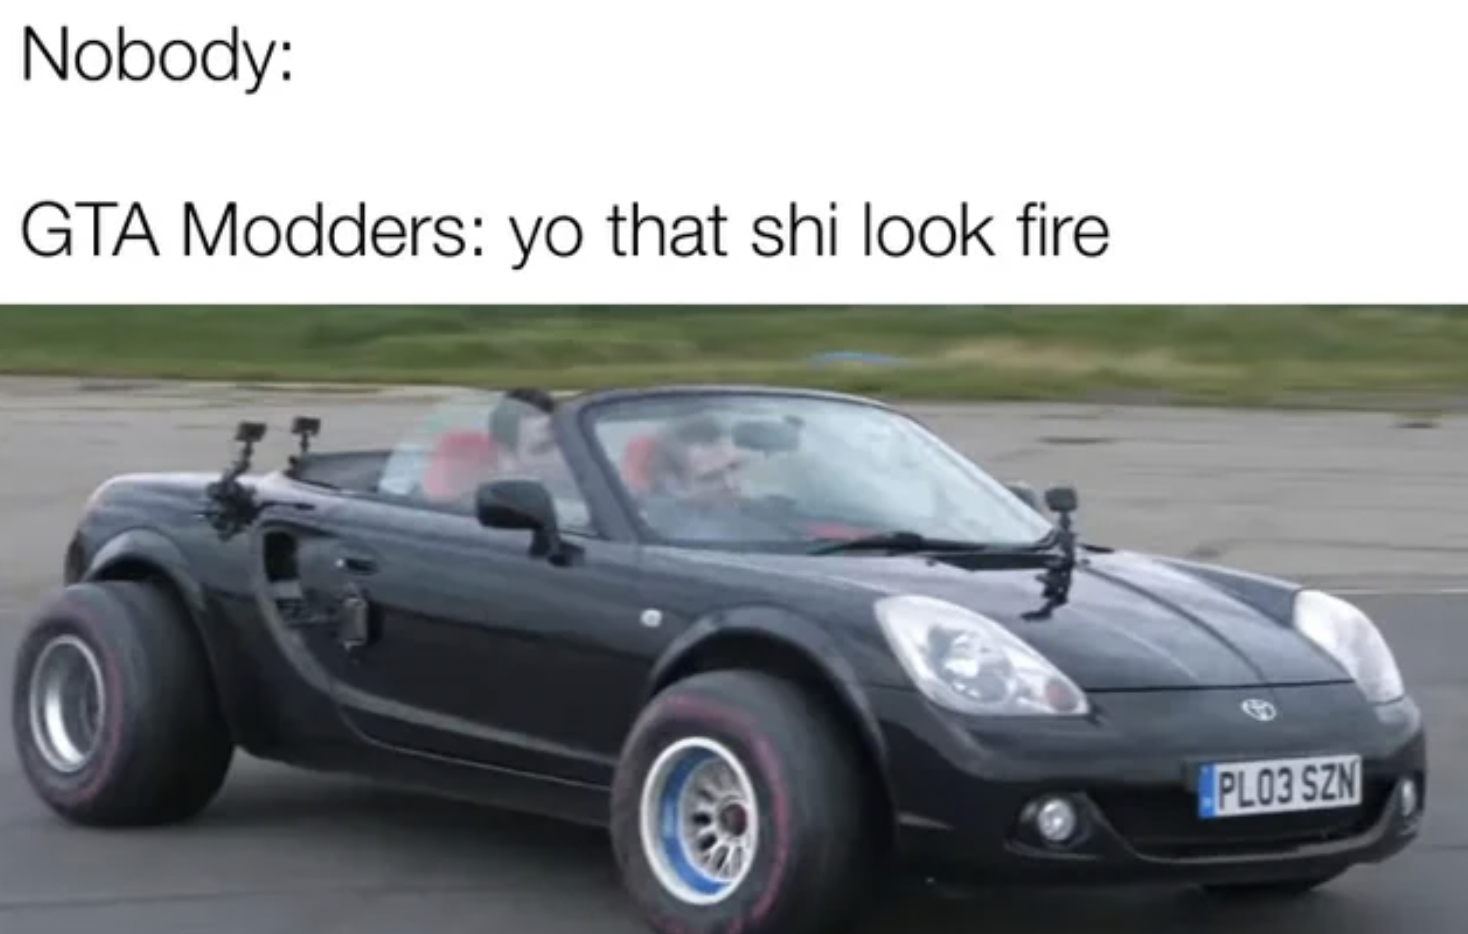 GTA V Memes - smart roadster - Nobody Gta Modders yo that shi look fire